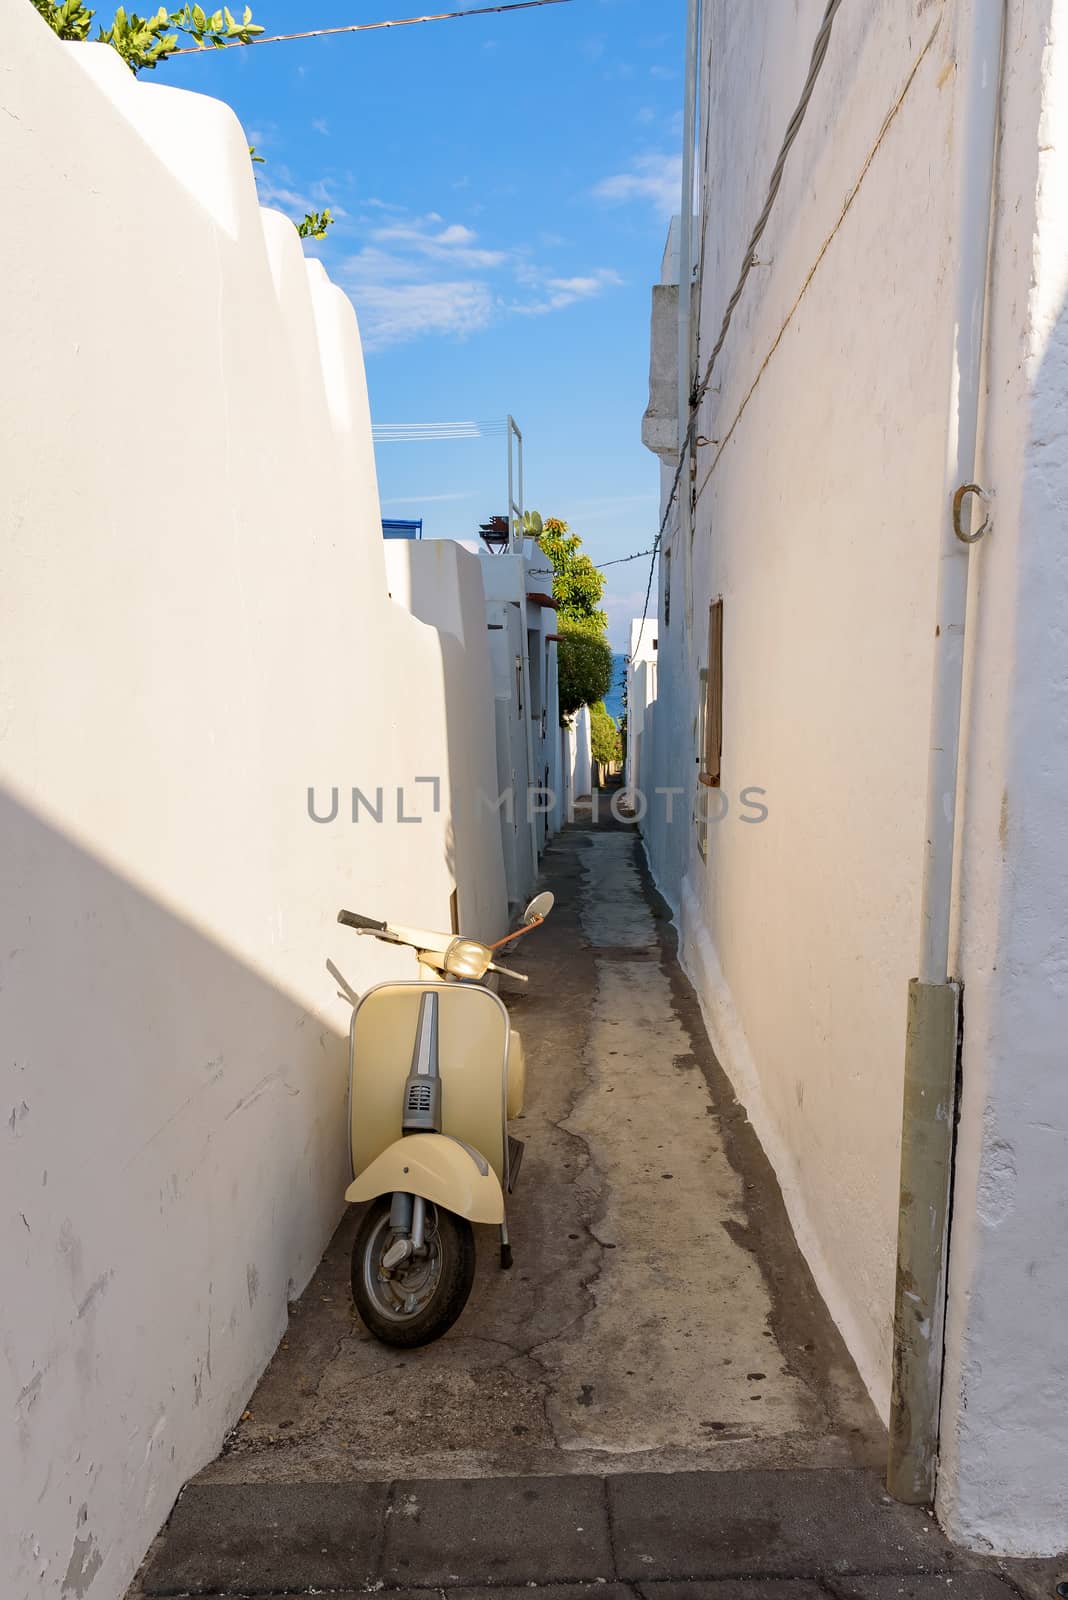 Scooter in narrow street of Stromboli village, Aeolian Islands, Italy